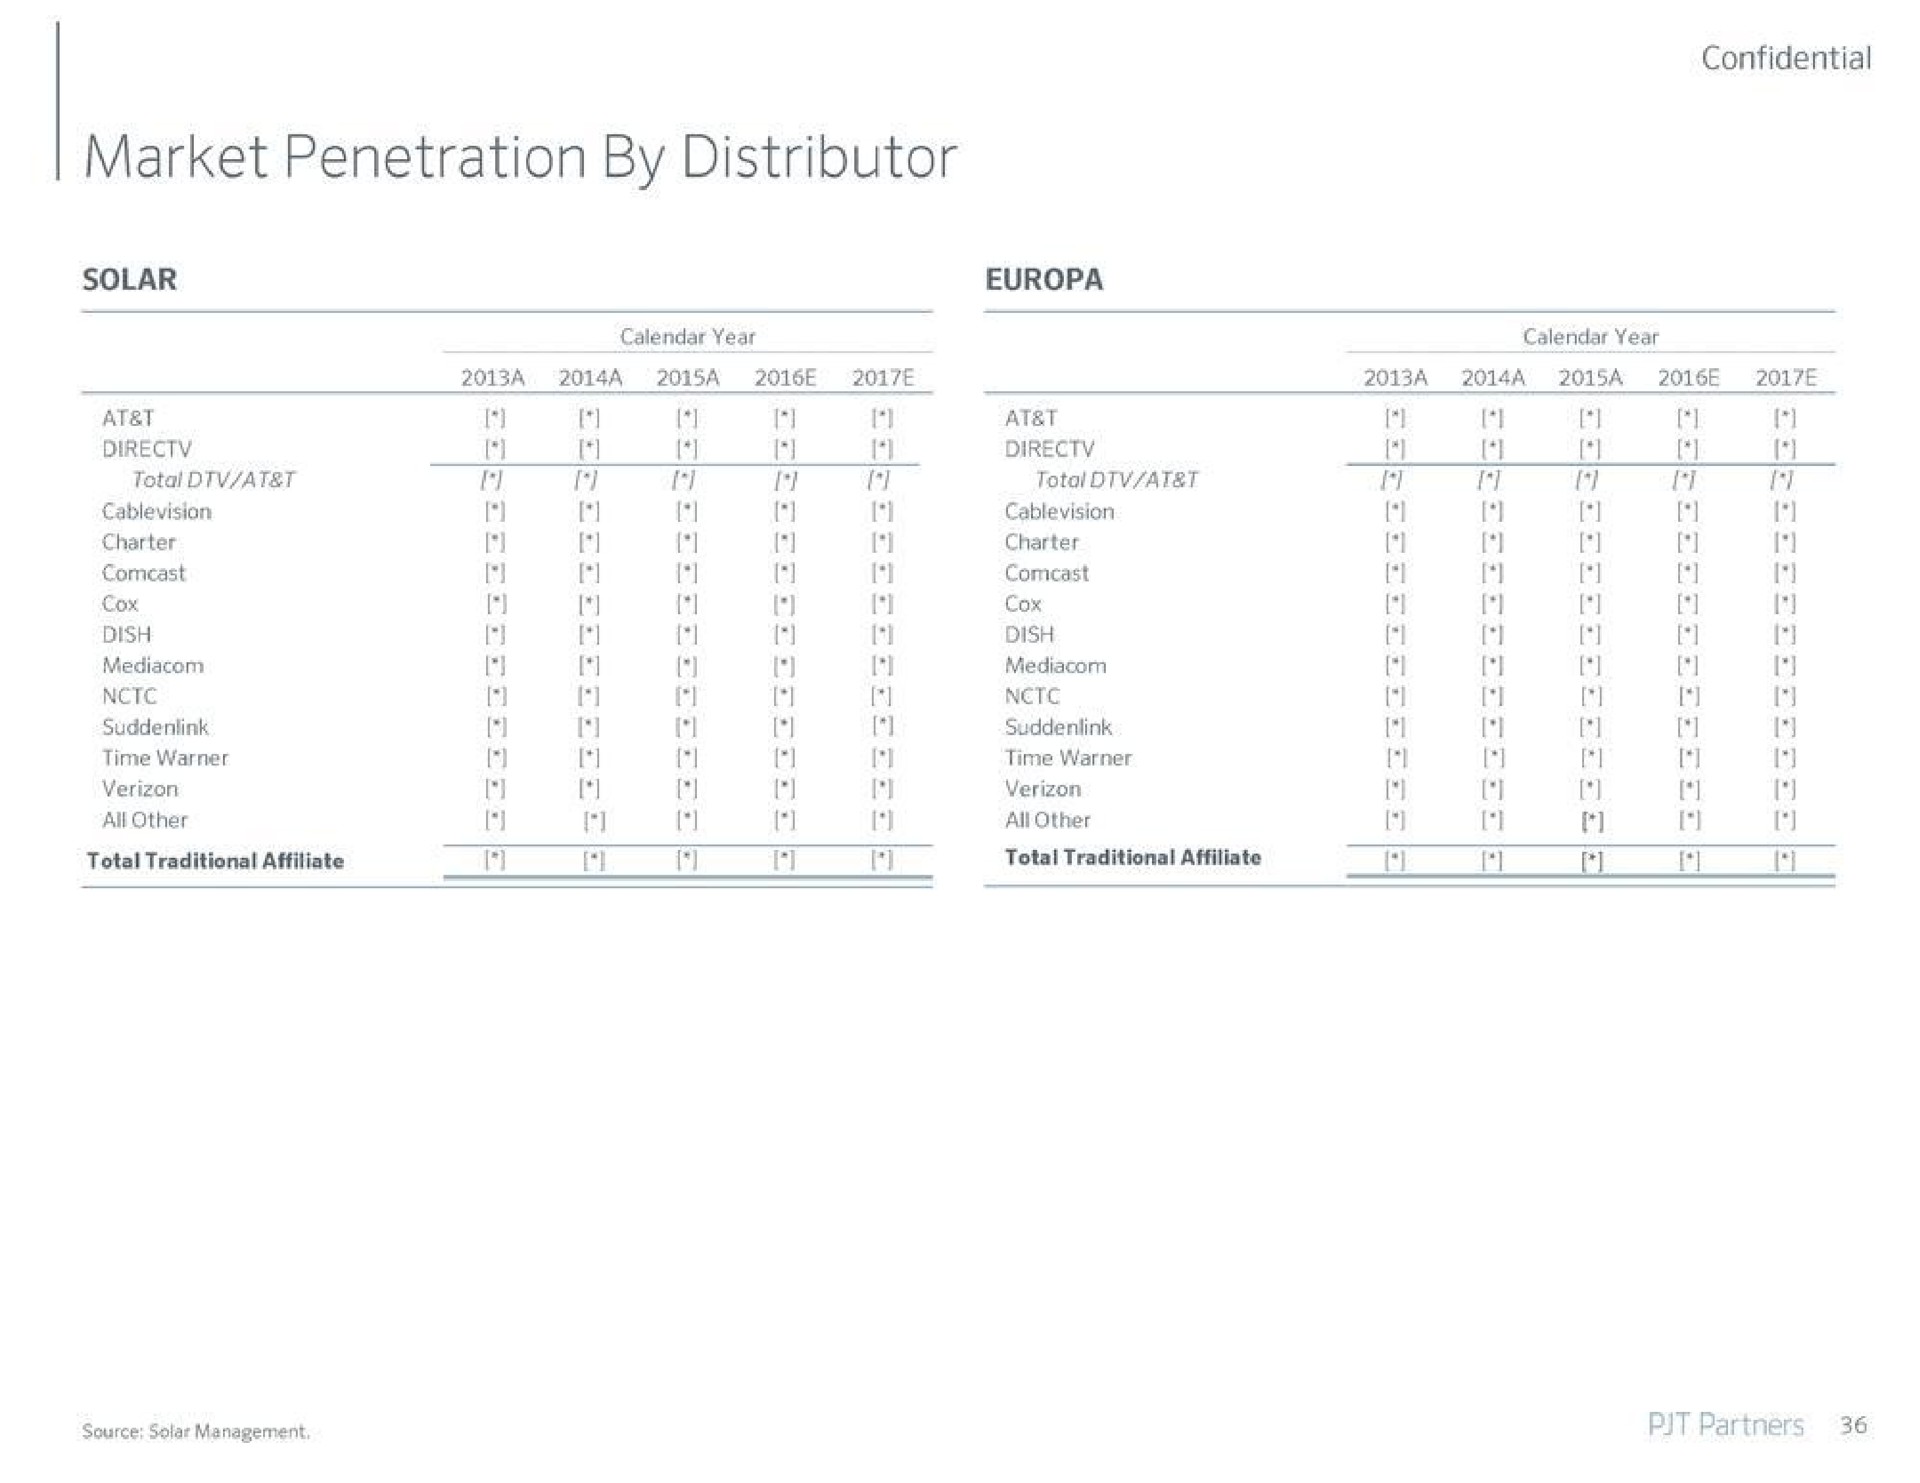 market penetration by distributor | PJT Partners